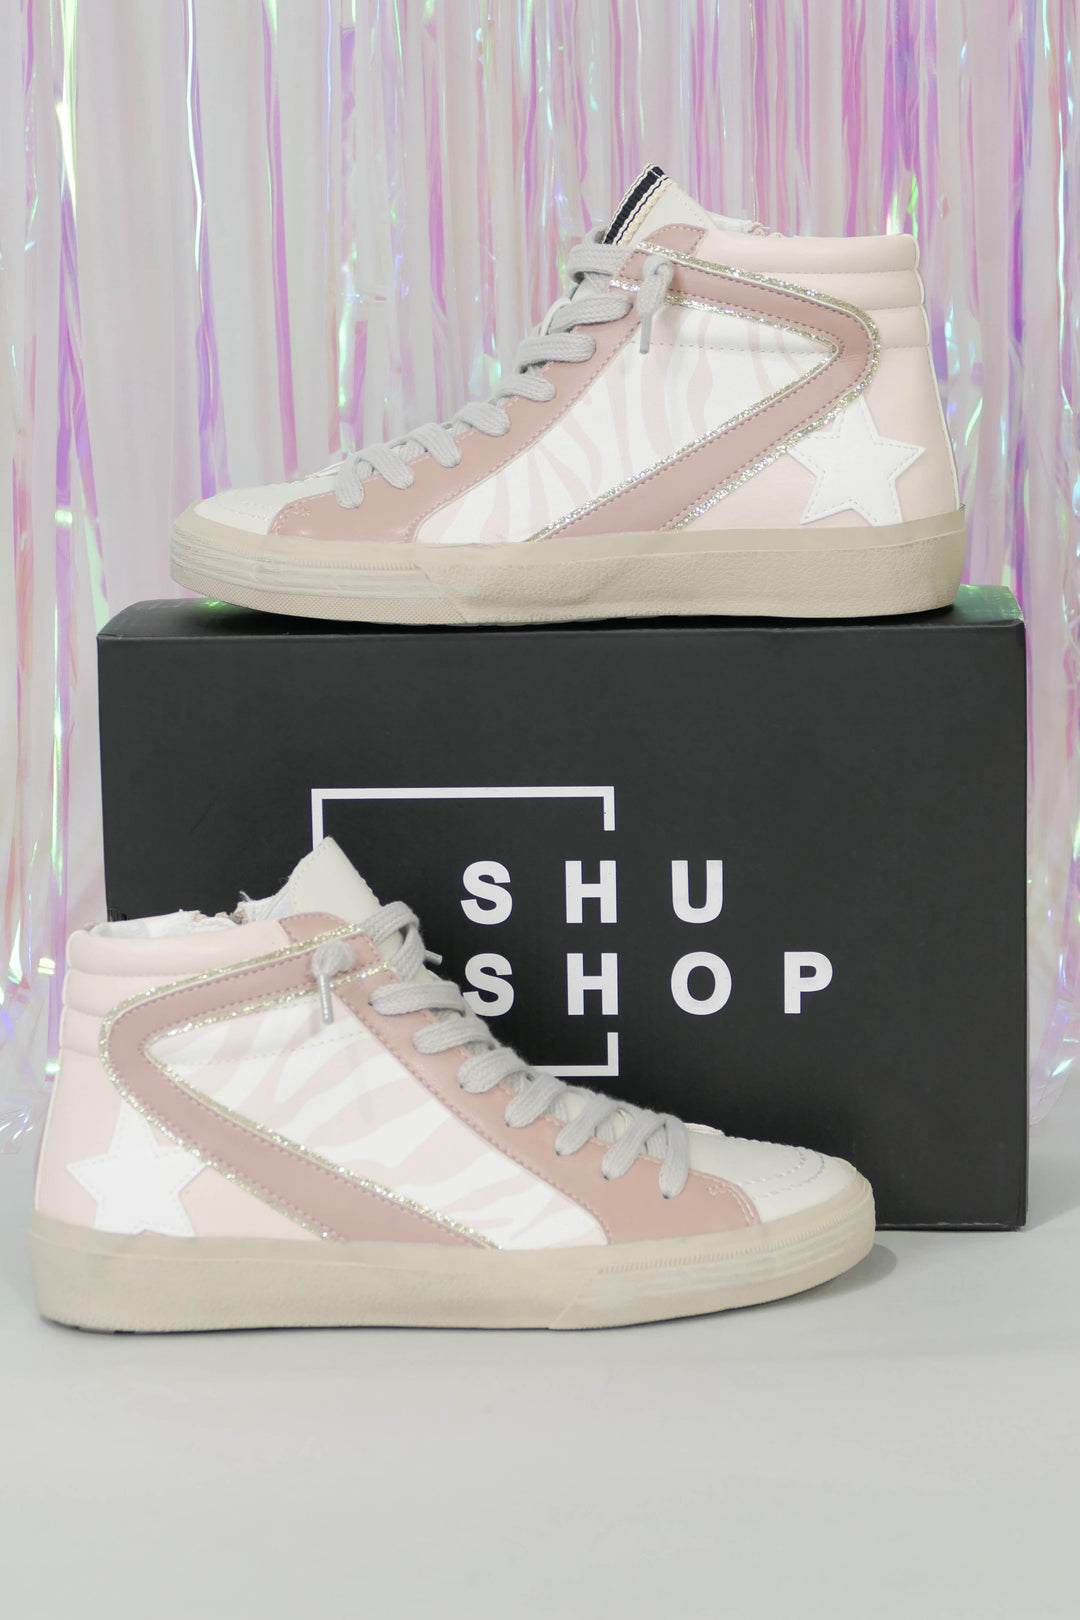 Shu Shop - Roxanne Blush Zebra Hi Top Sneakers